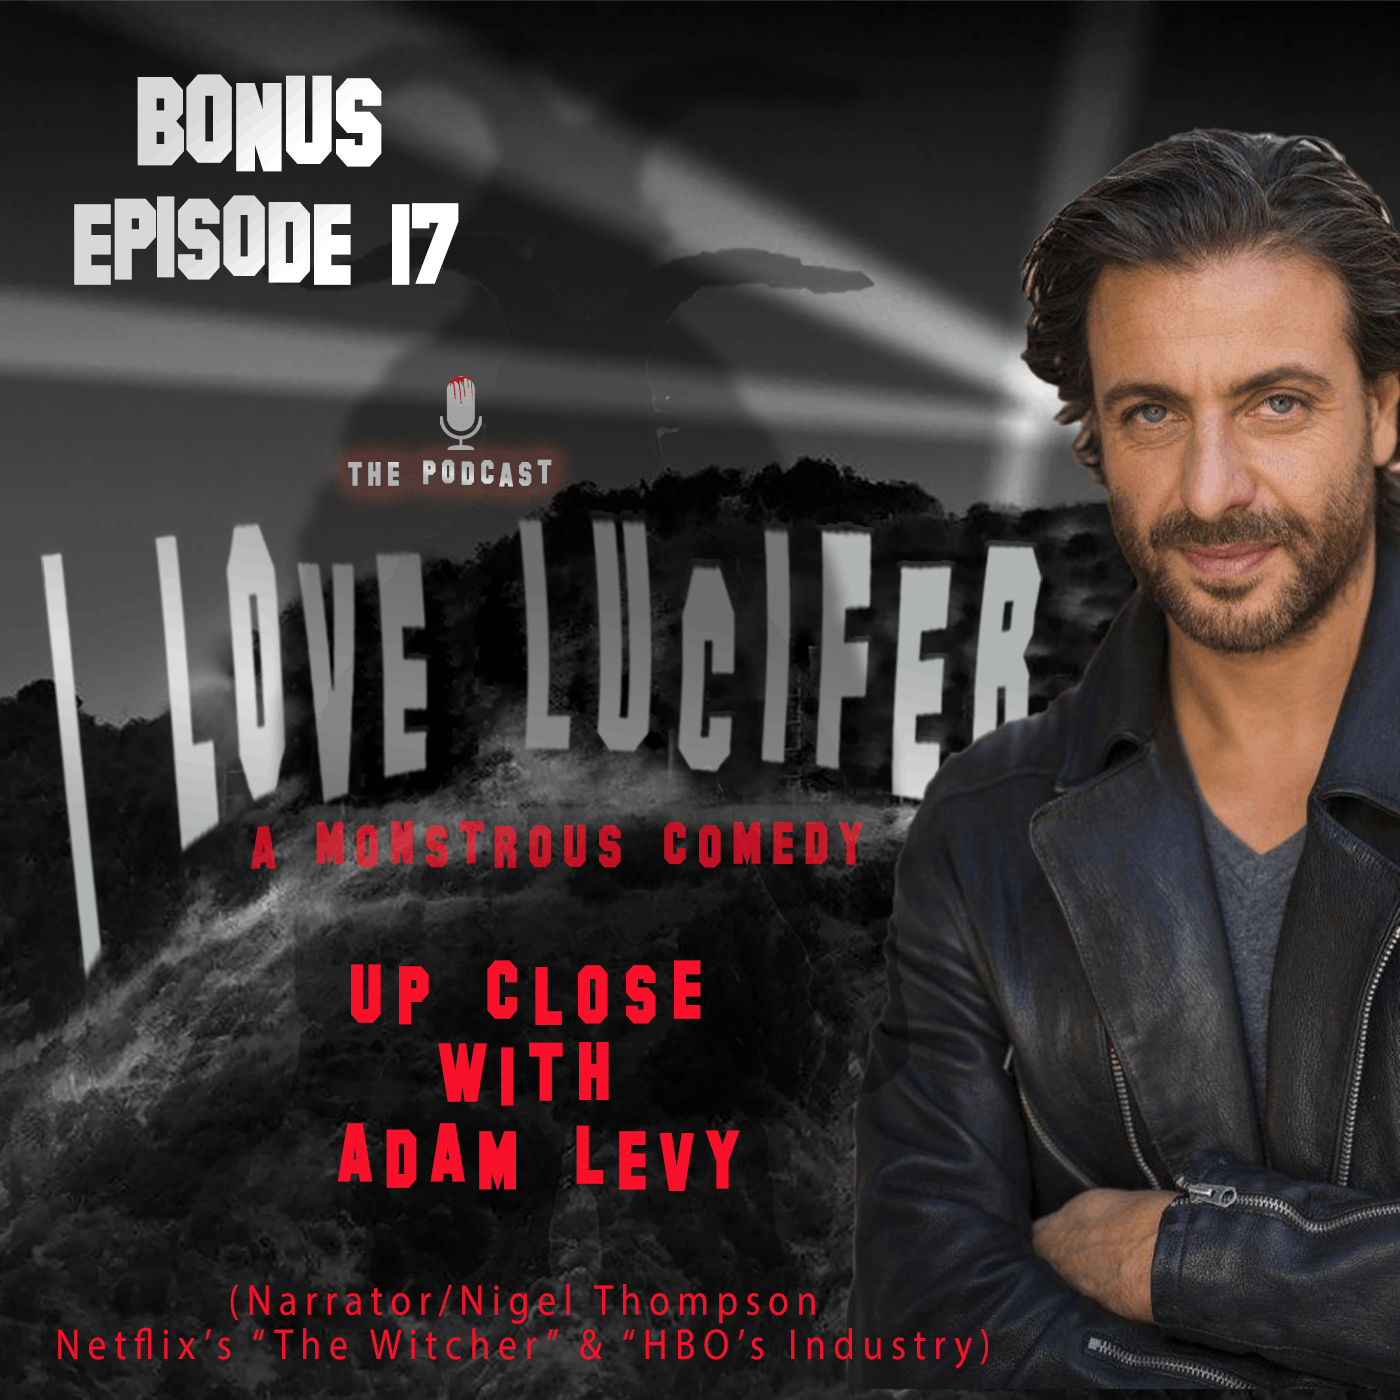 BONUS - Up Close with I Love Lucifer star Adam Levy